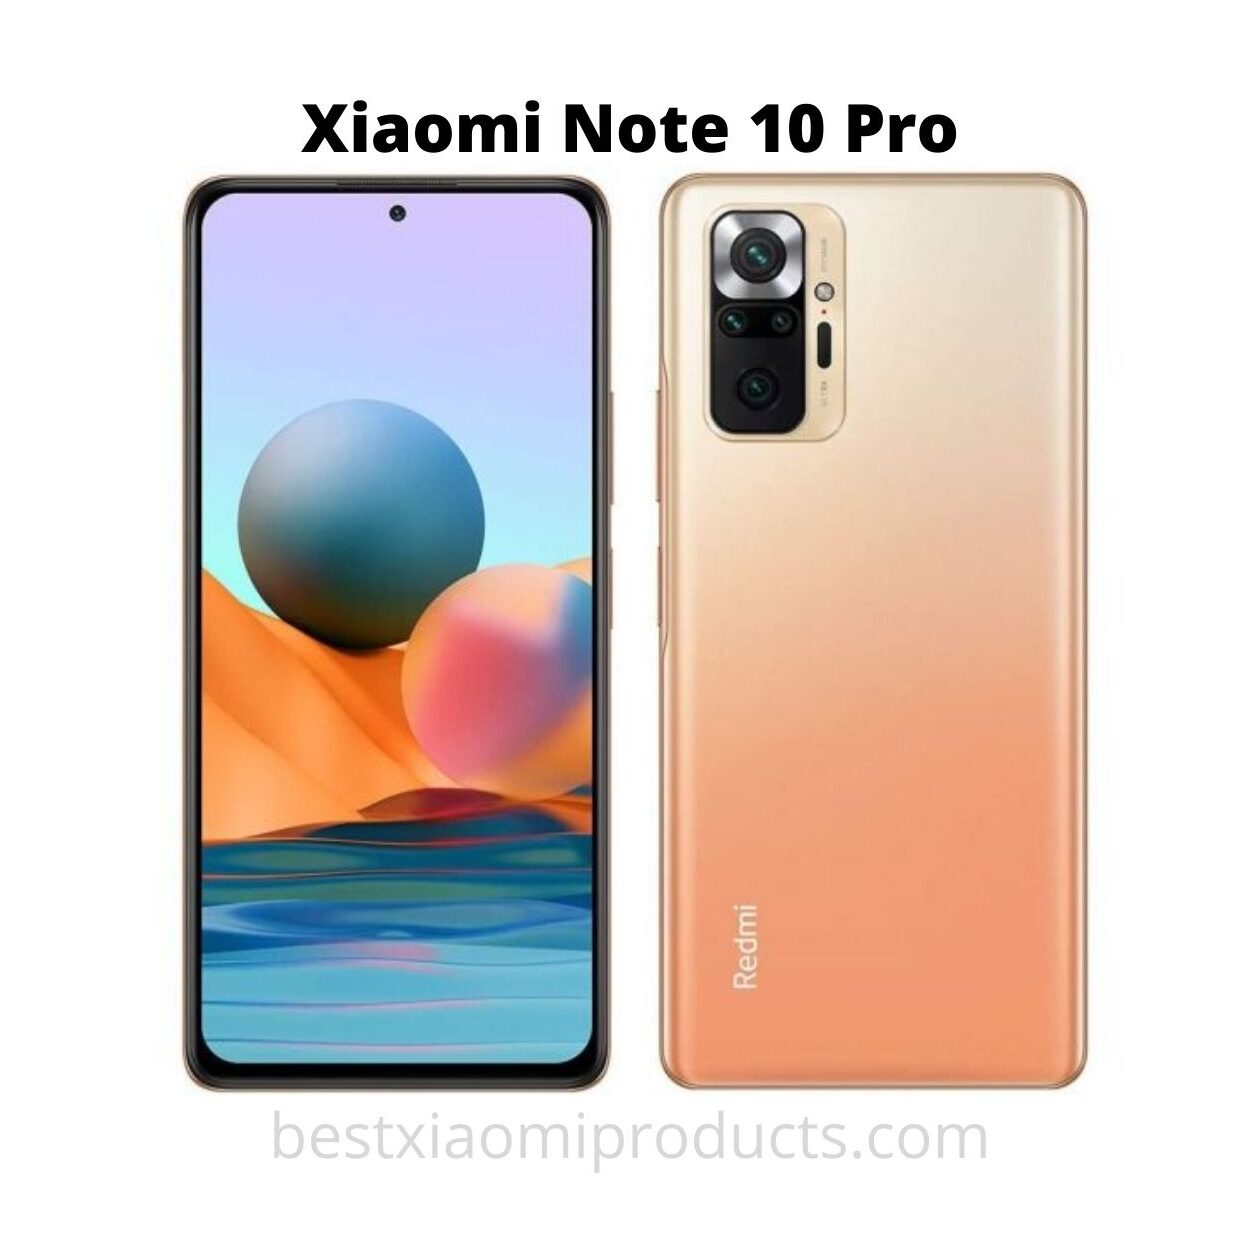 Xiaomi Nota 10 Pro